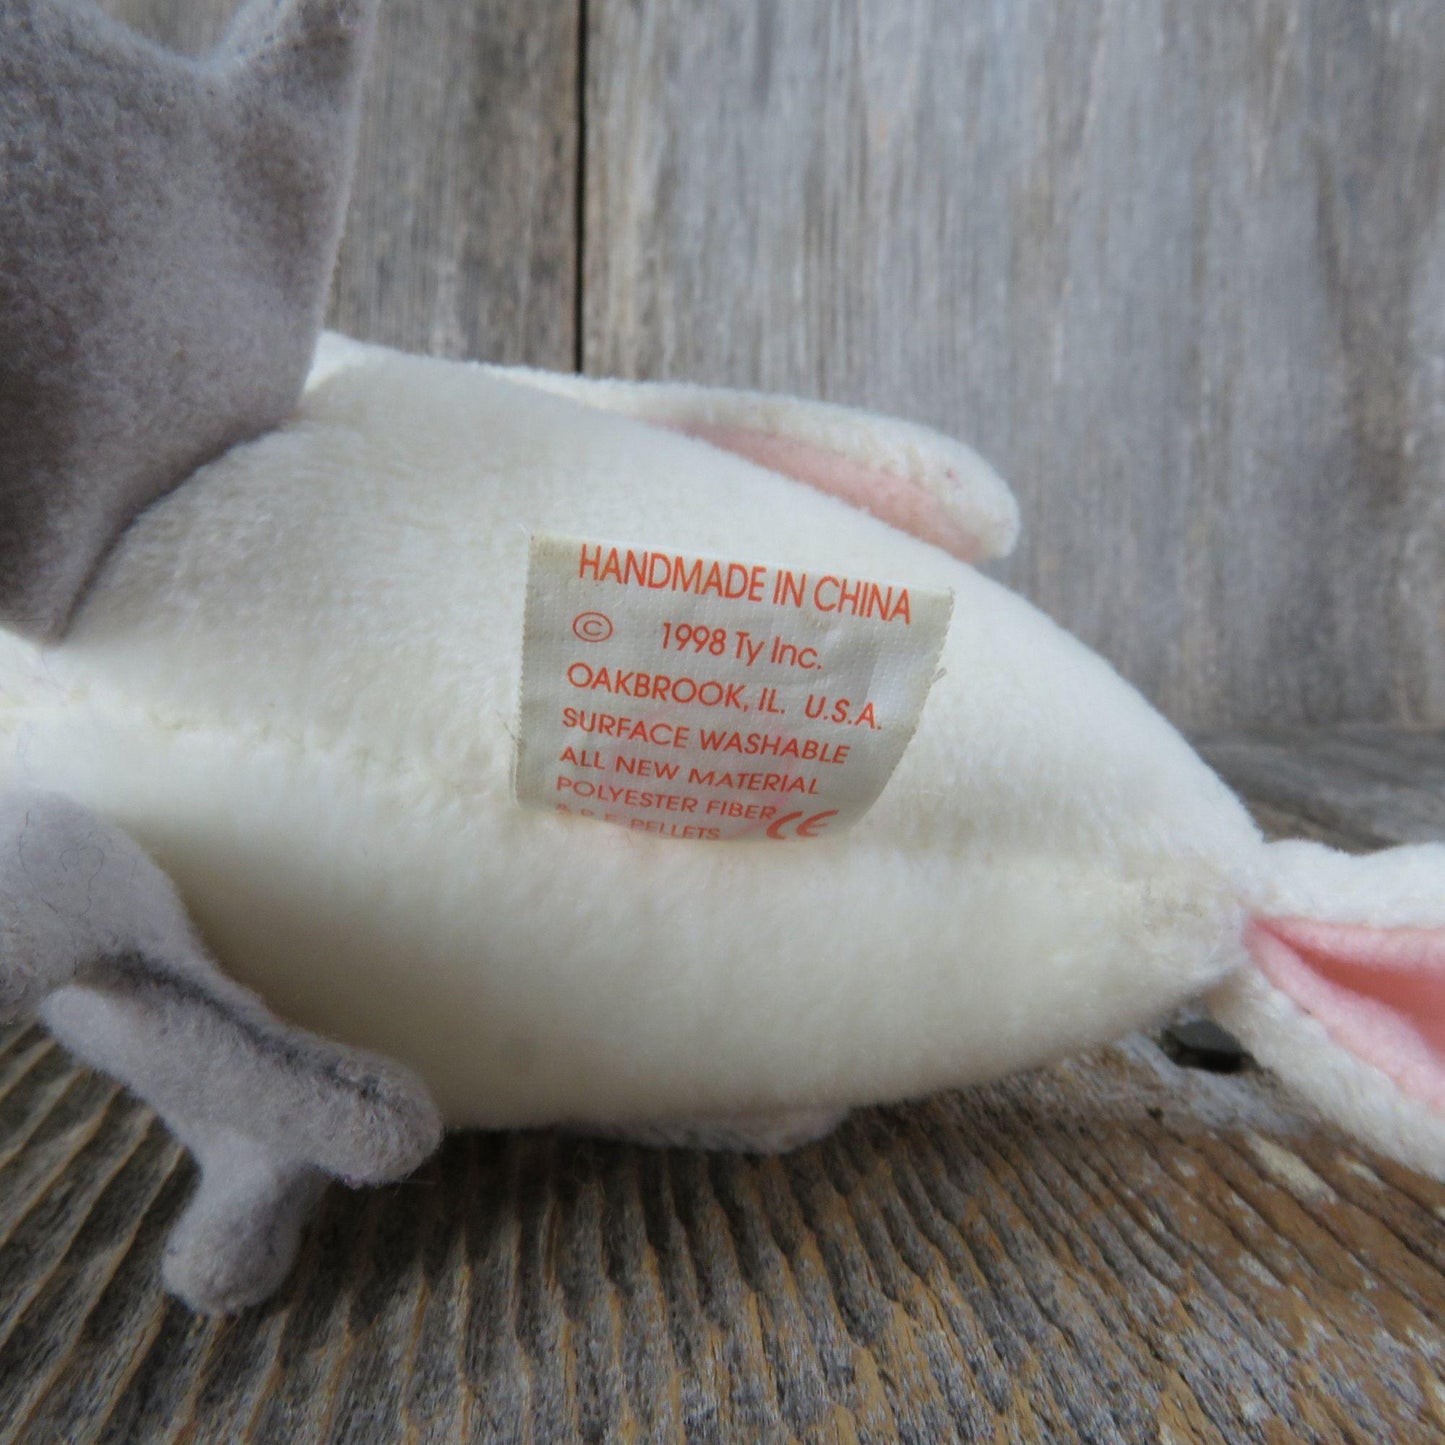 Vintage White Cockatoo Plush Beanie Baby Kuku Bird Bean Bag Stuffed Animal 1998